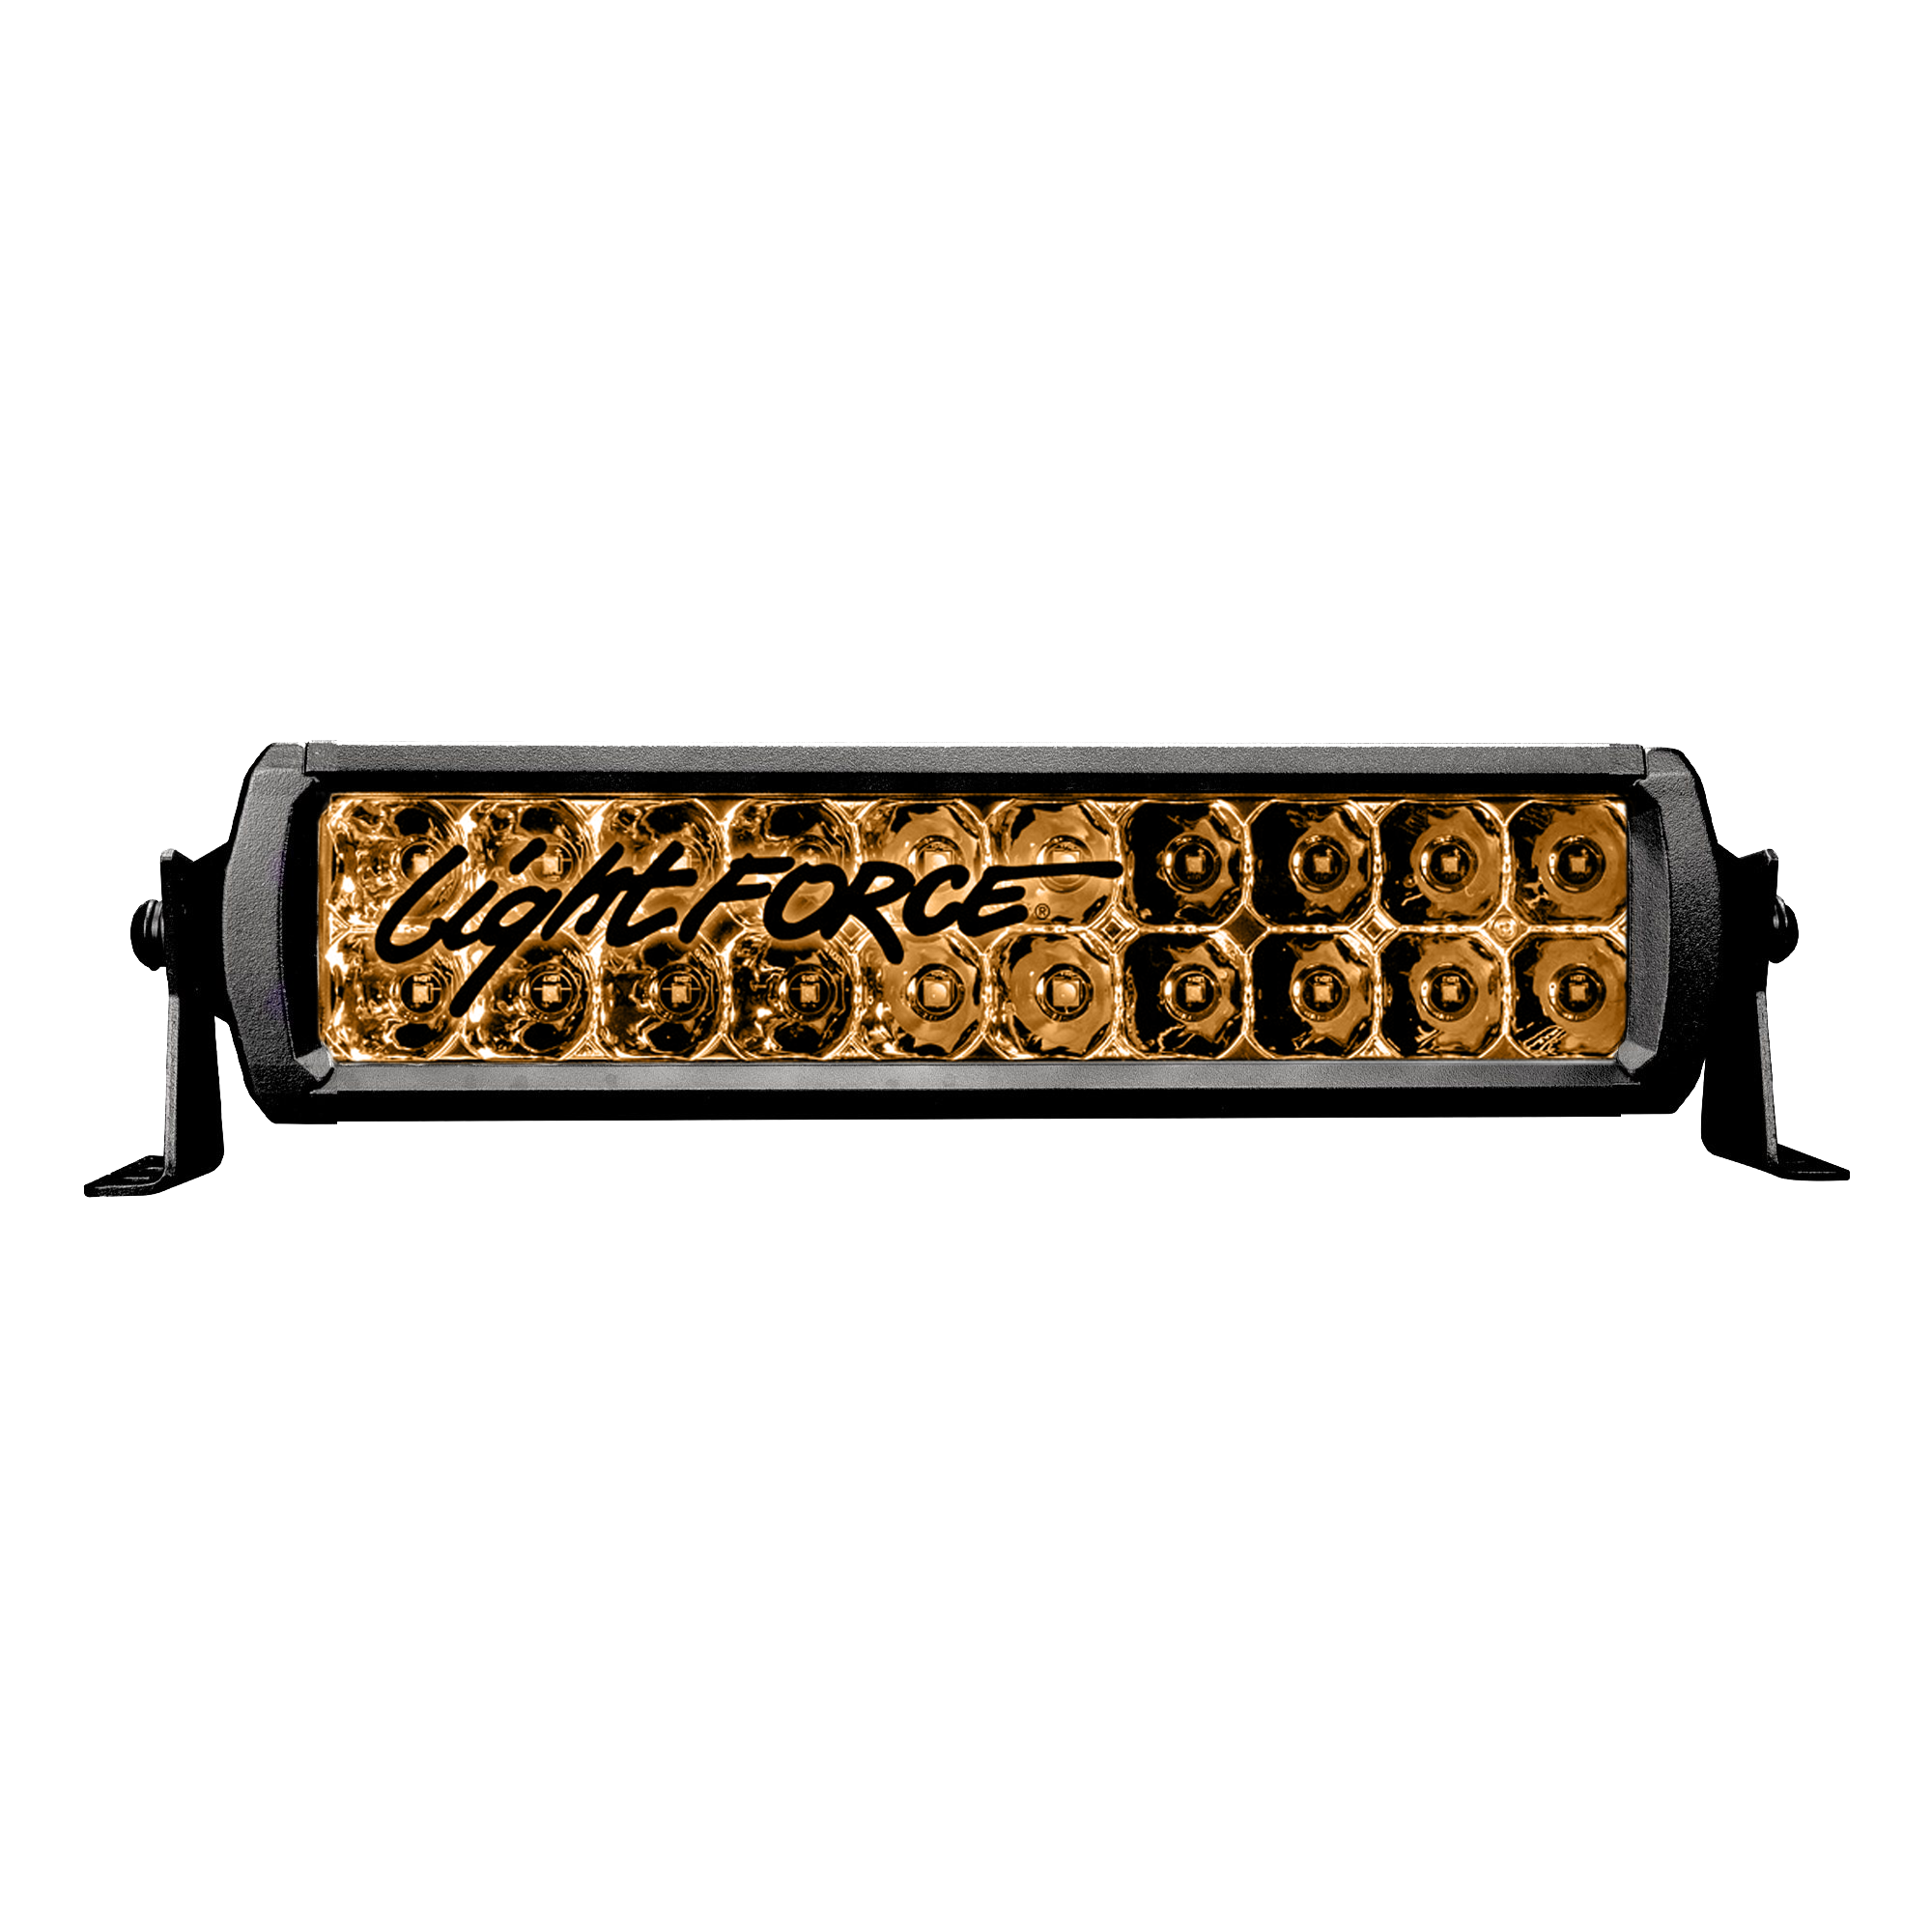 Viper 10 Inch Amber Dual Row LED Light Bar